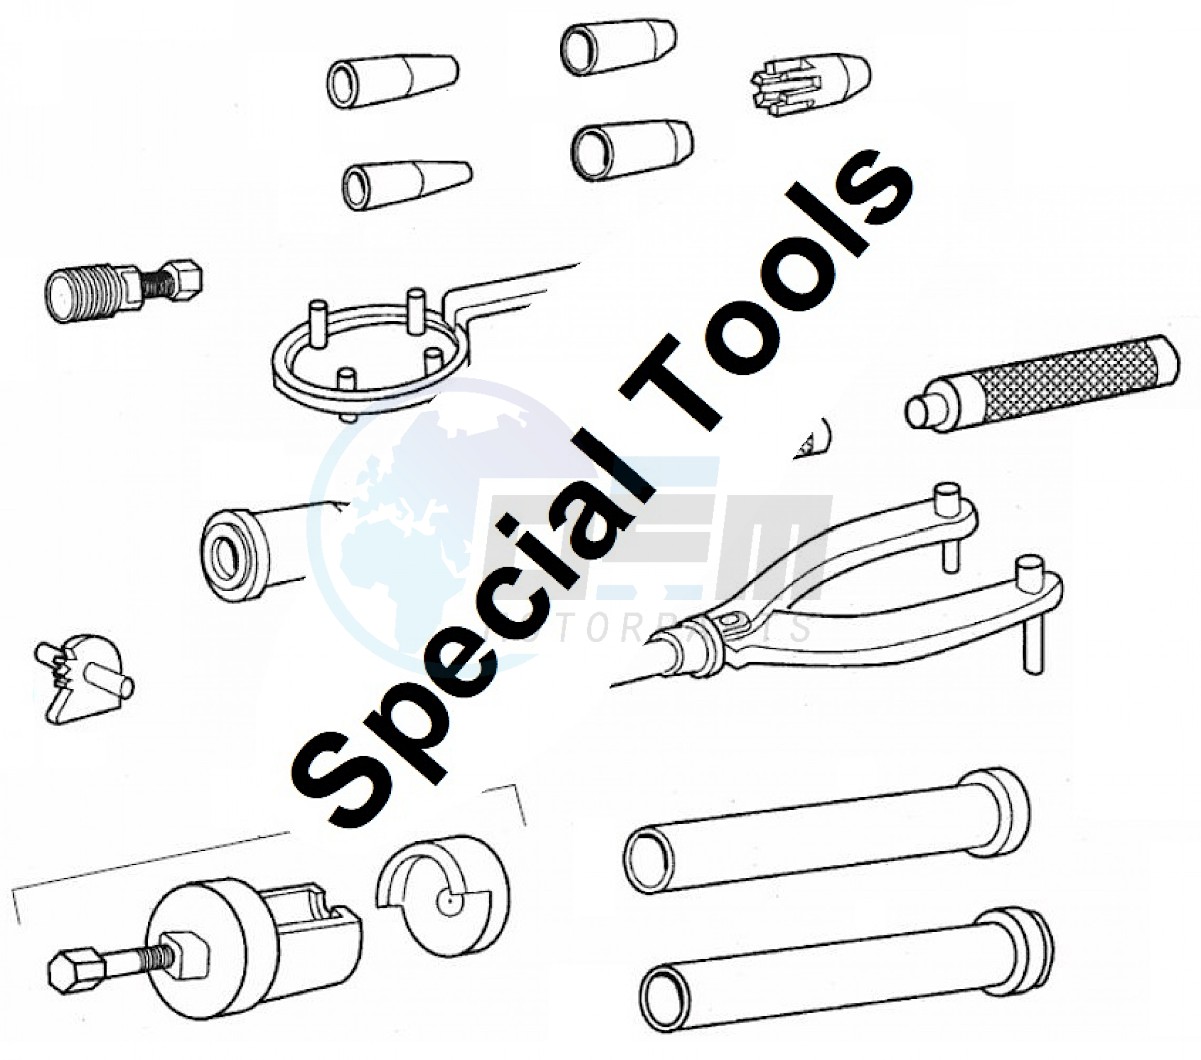 Tools (Positions) blueprint